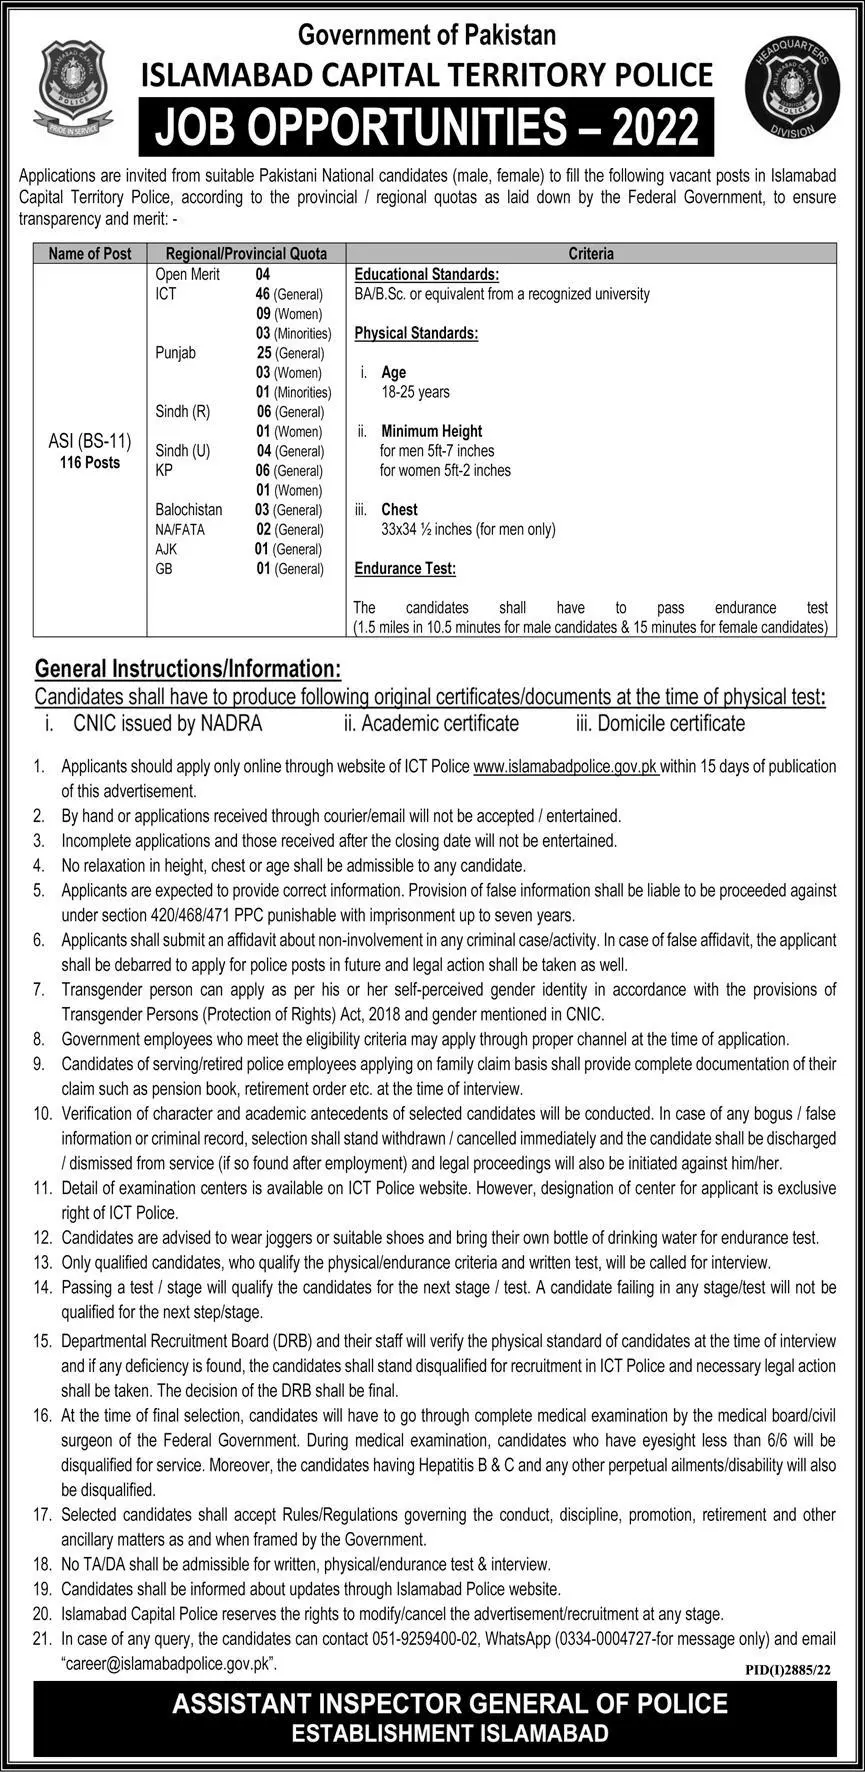 Islamabad Police Jobs 2022 For ASI - www.islamabadpolice.gov.pk